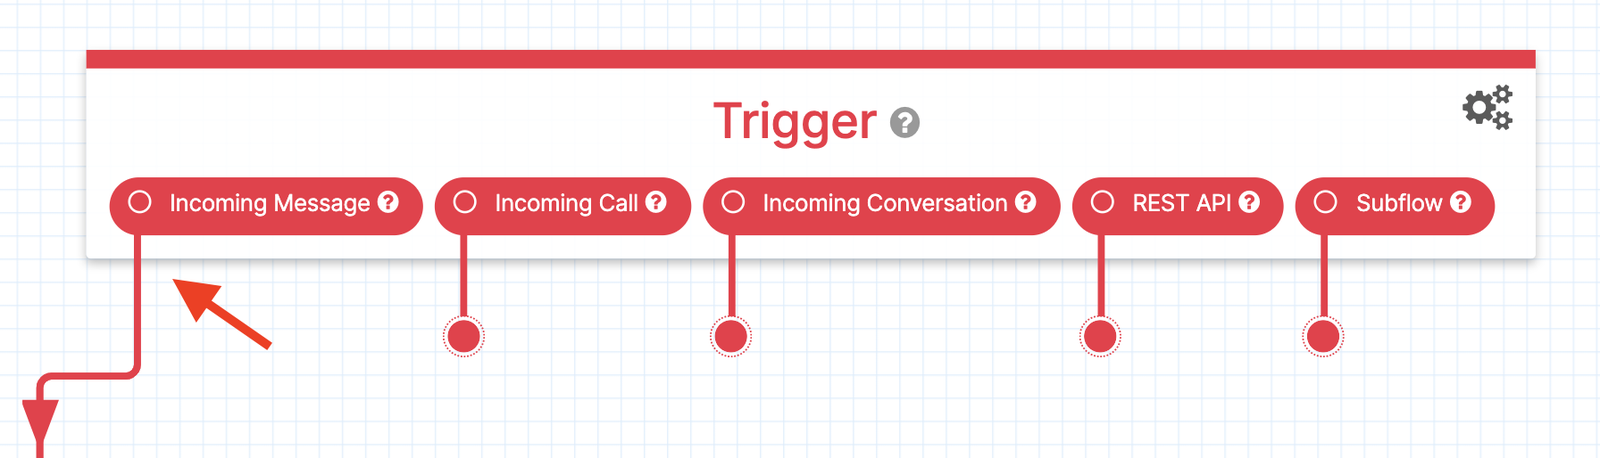 Twilio Studio Tutorial Baristabot arrow pointing to Incoming Message transition of Trigger (Start) Widget.